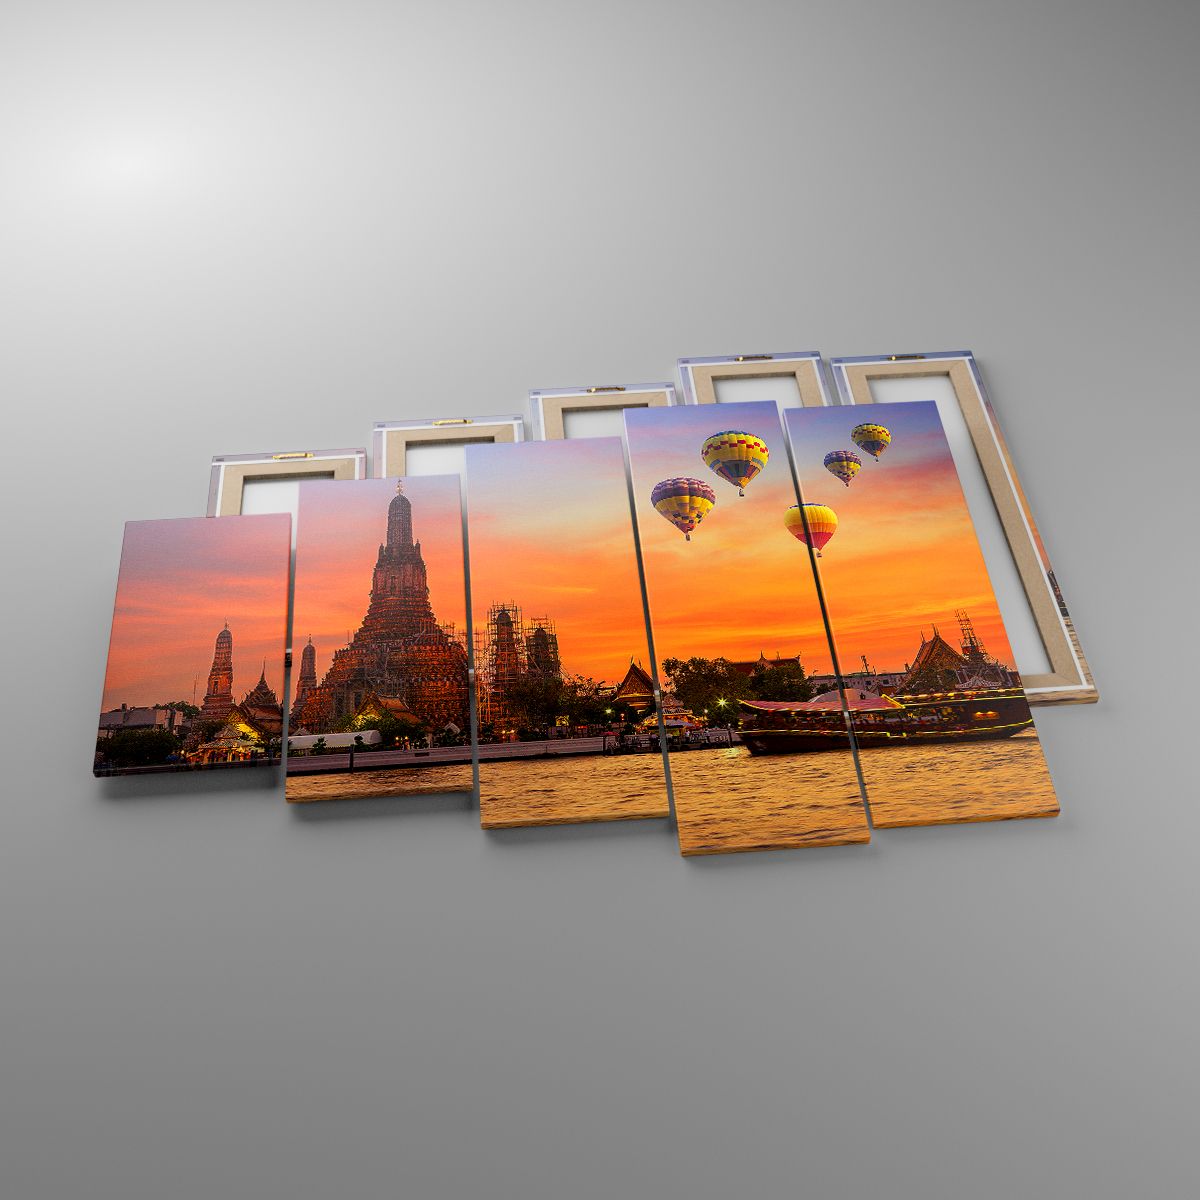 Quadri Bangkok, Quadri Tempio Dell'Alba, Quadri Tailandia, Quadri Palloncini, Quadri Asia